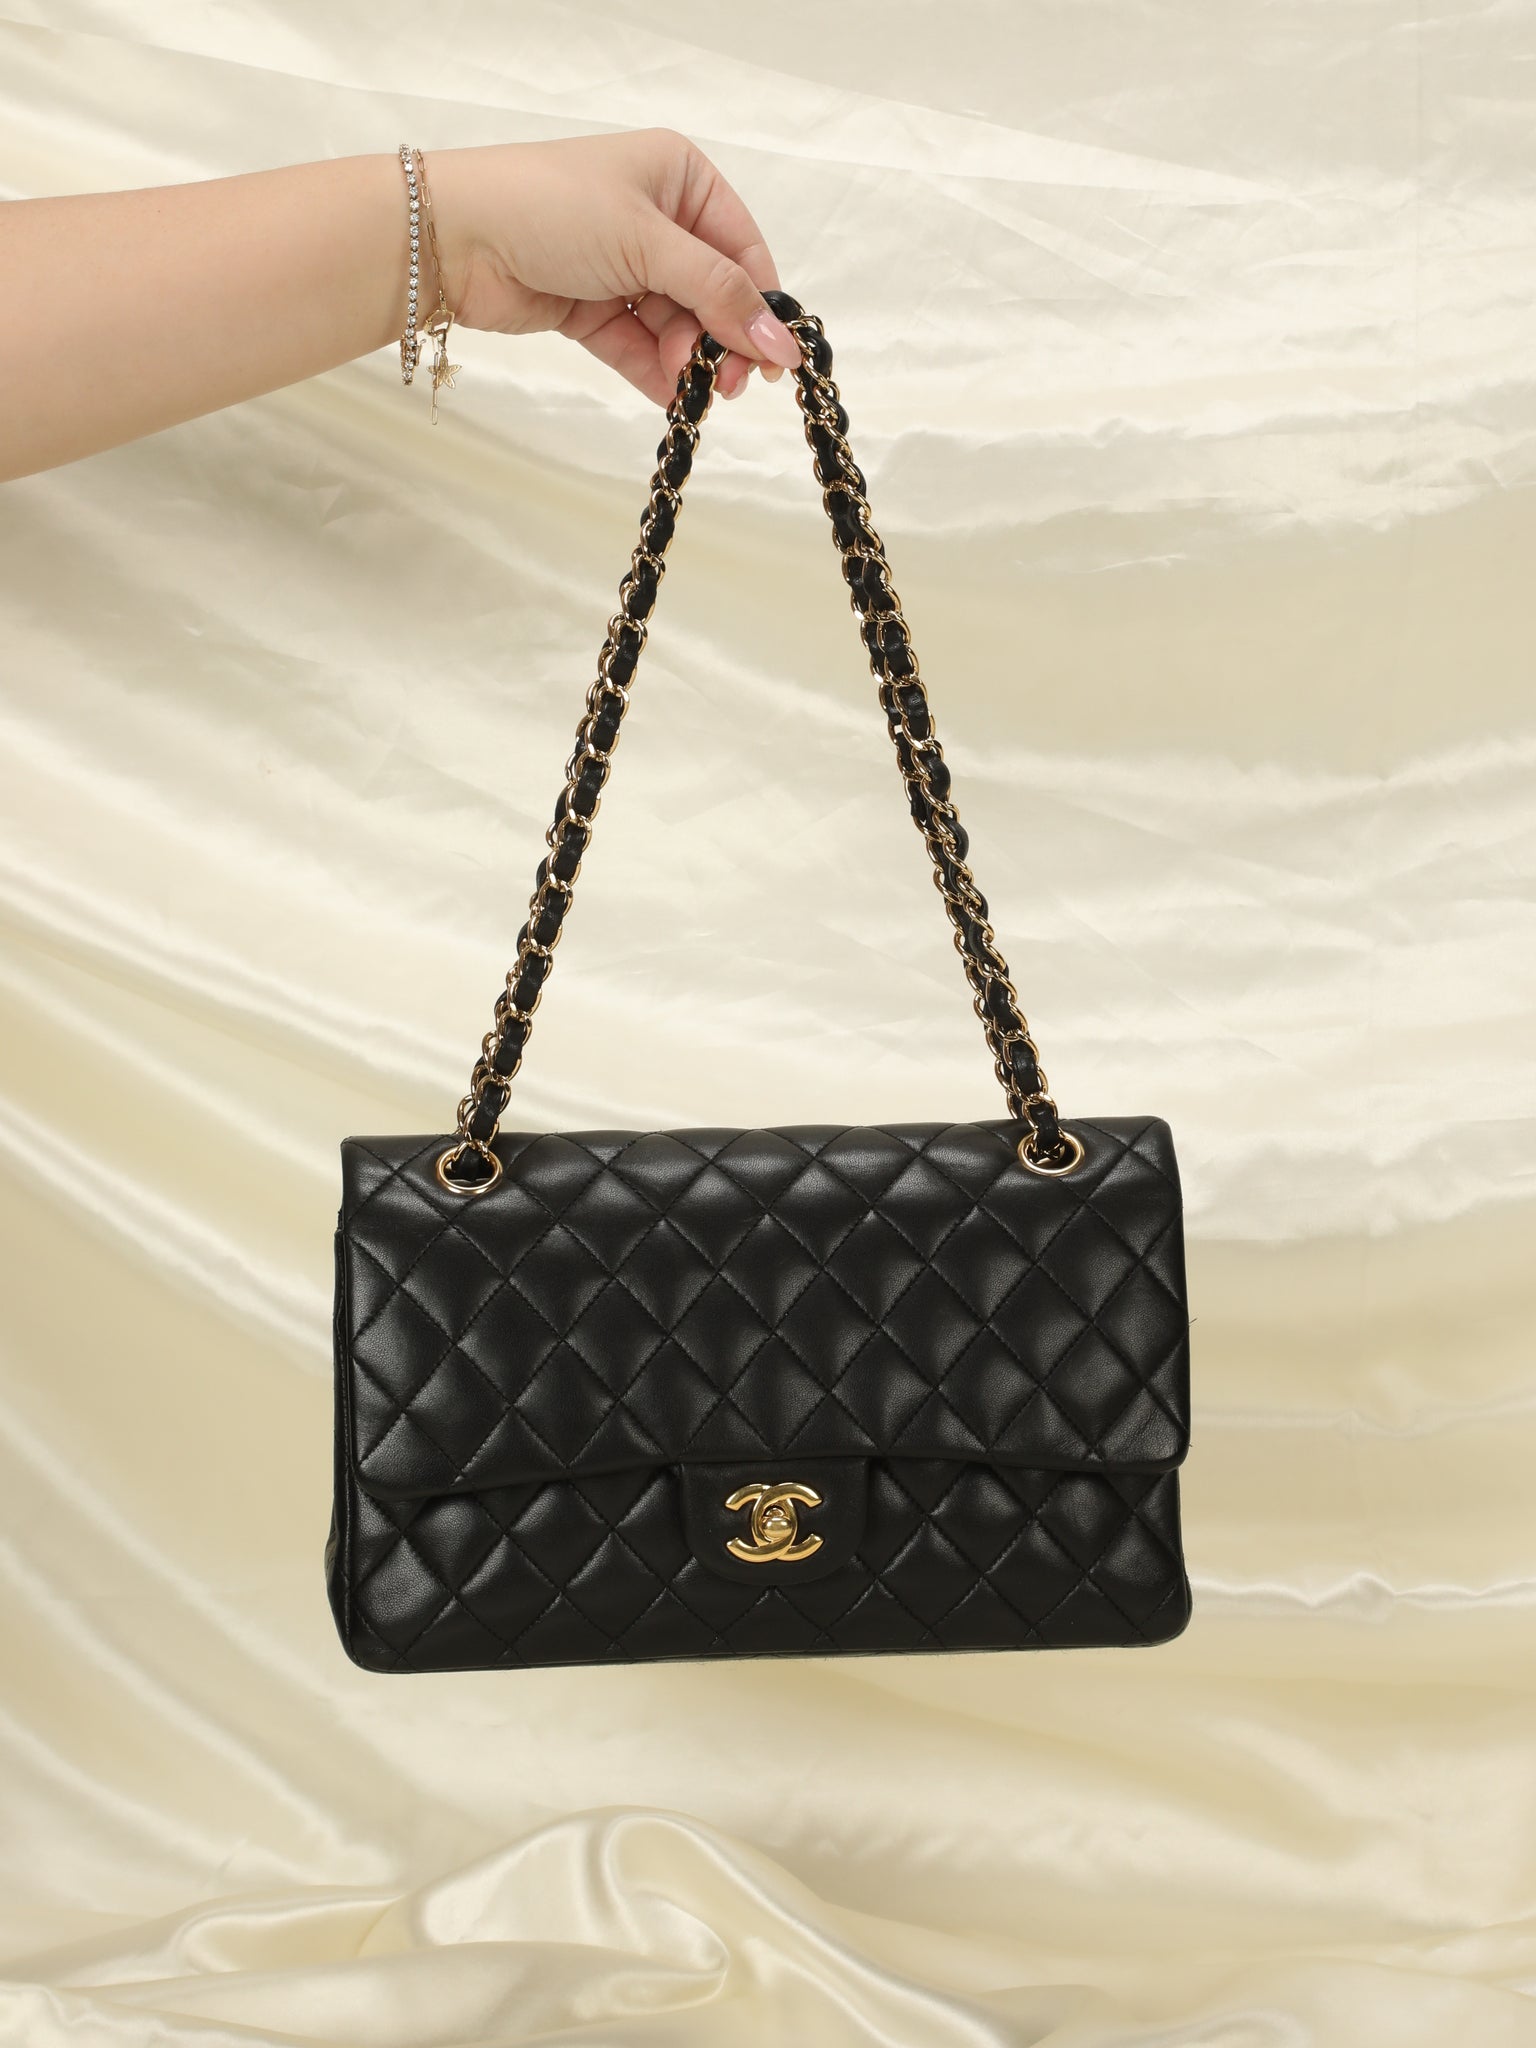 Handbags Chanel Classic Medium